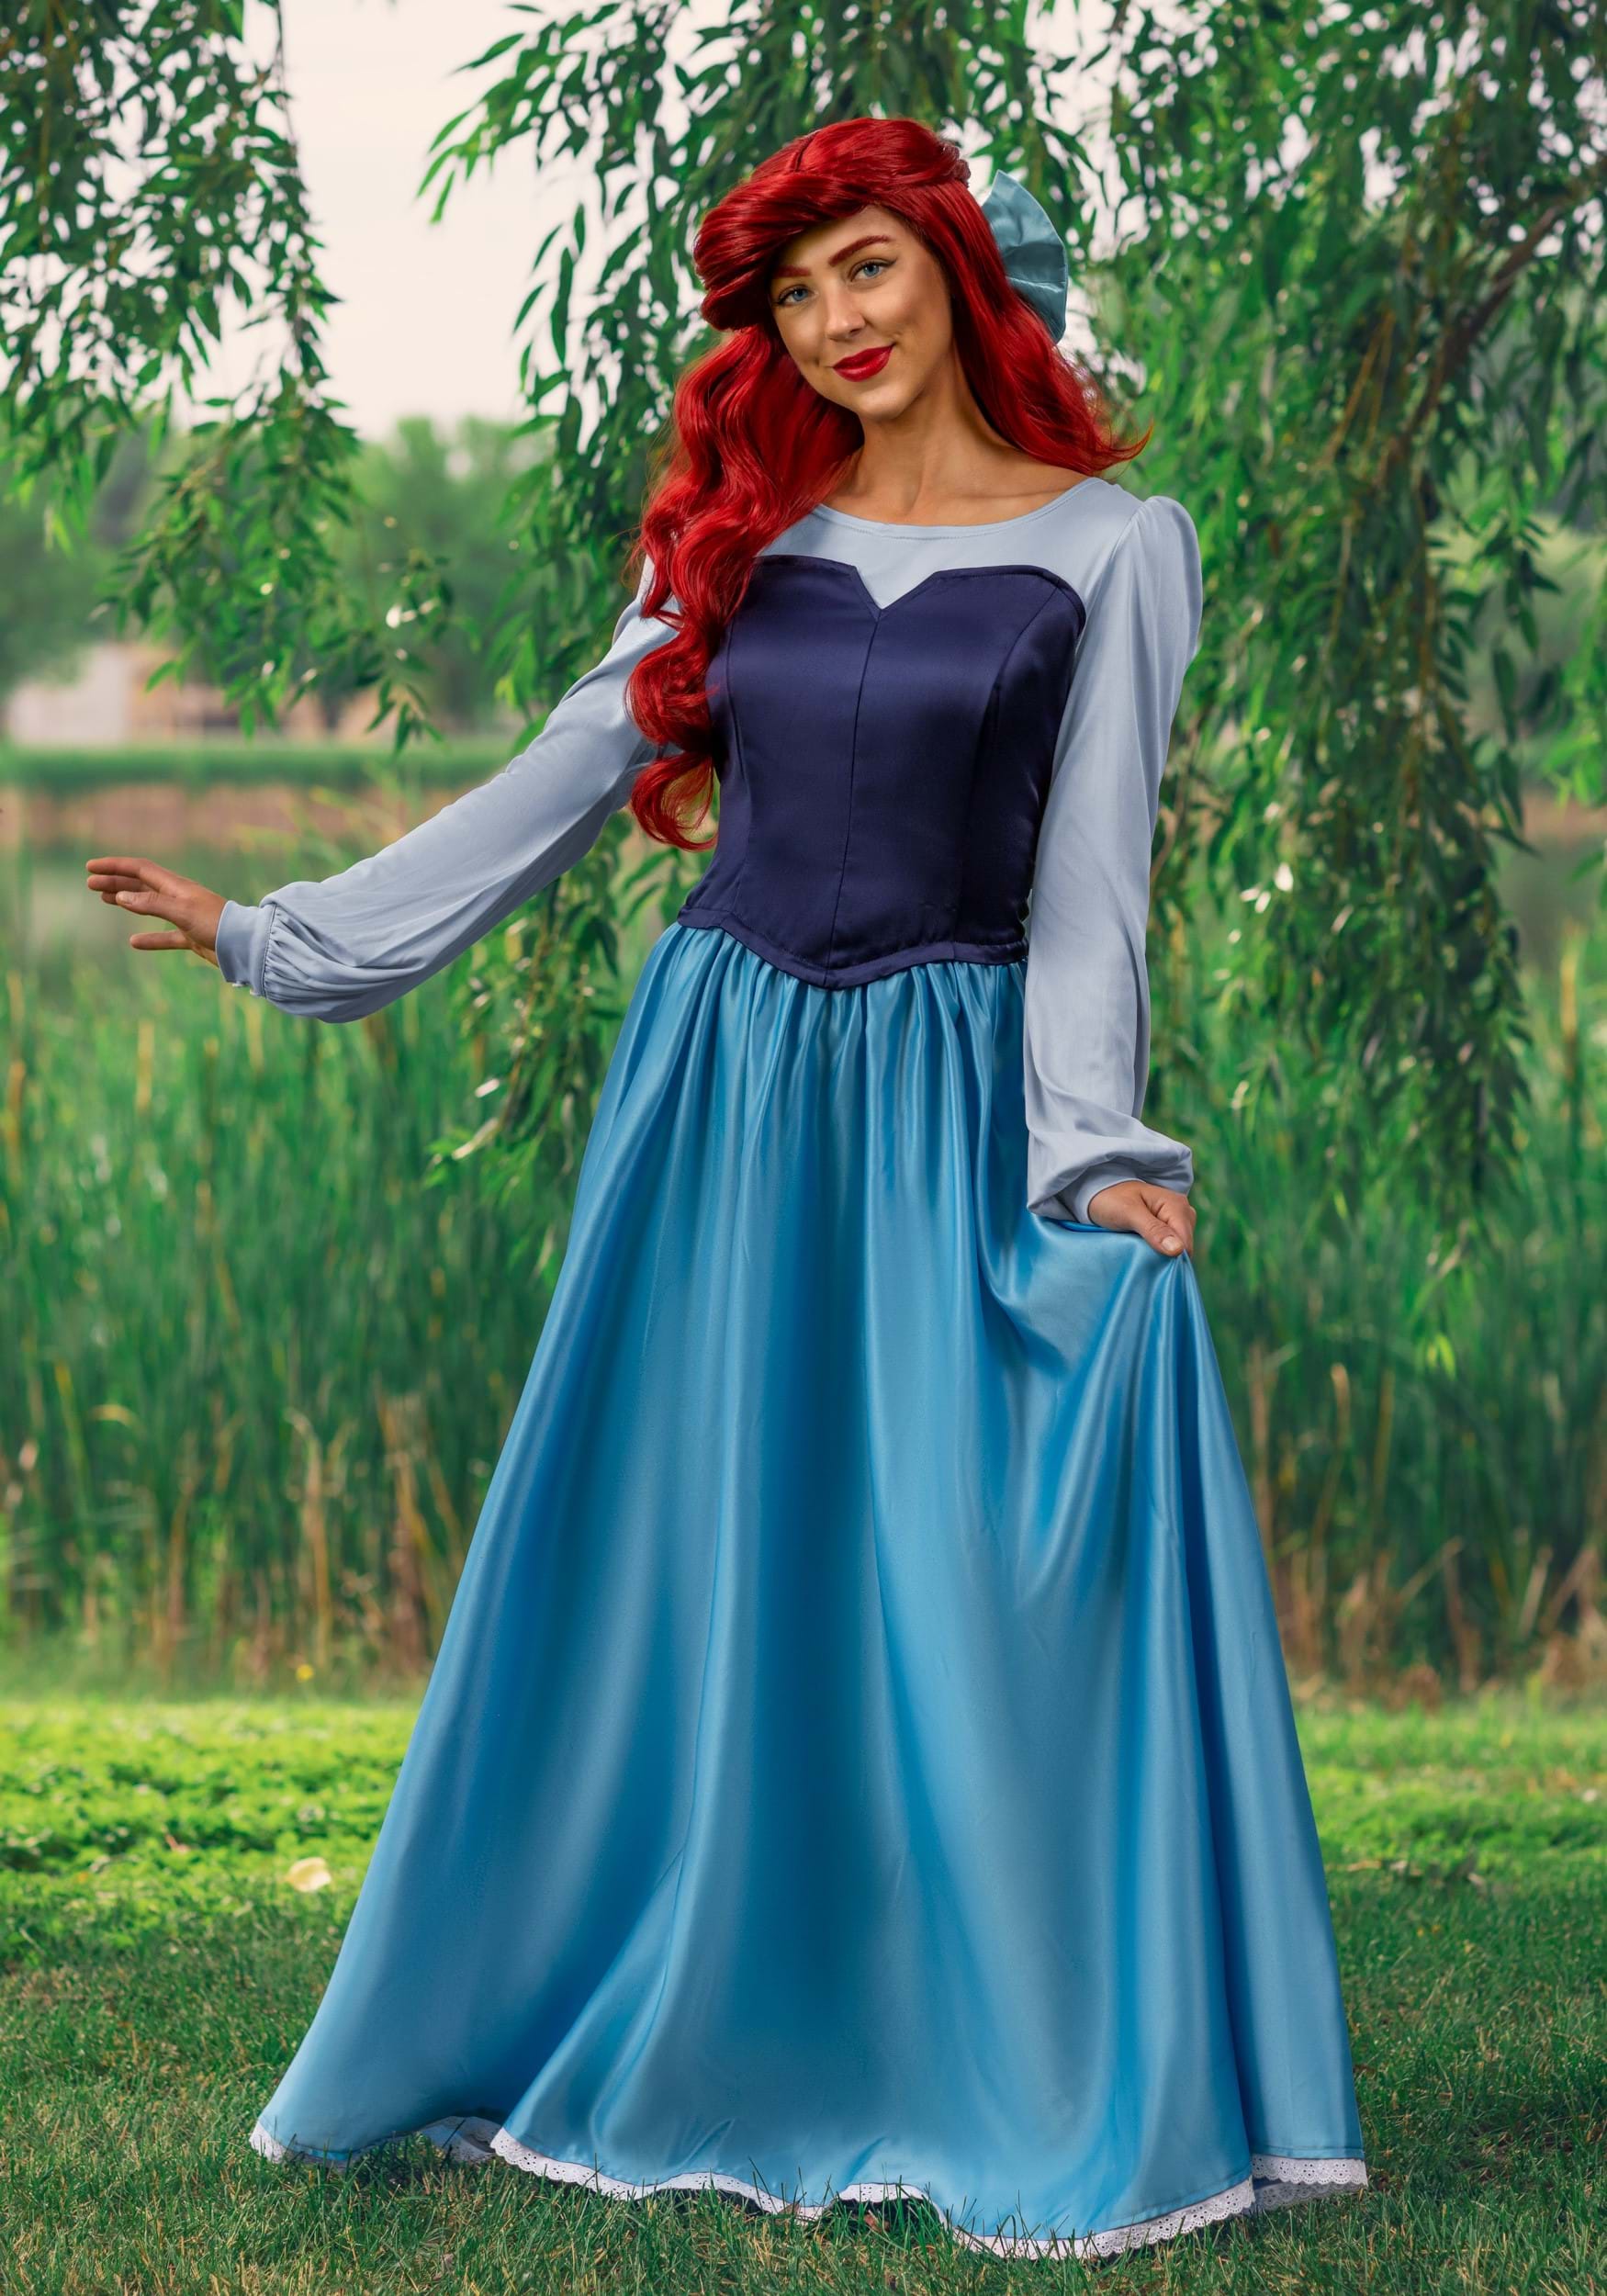 Ariel blue dress cosplay